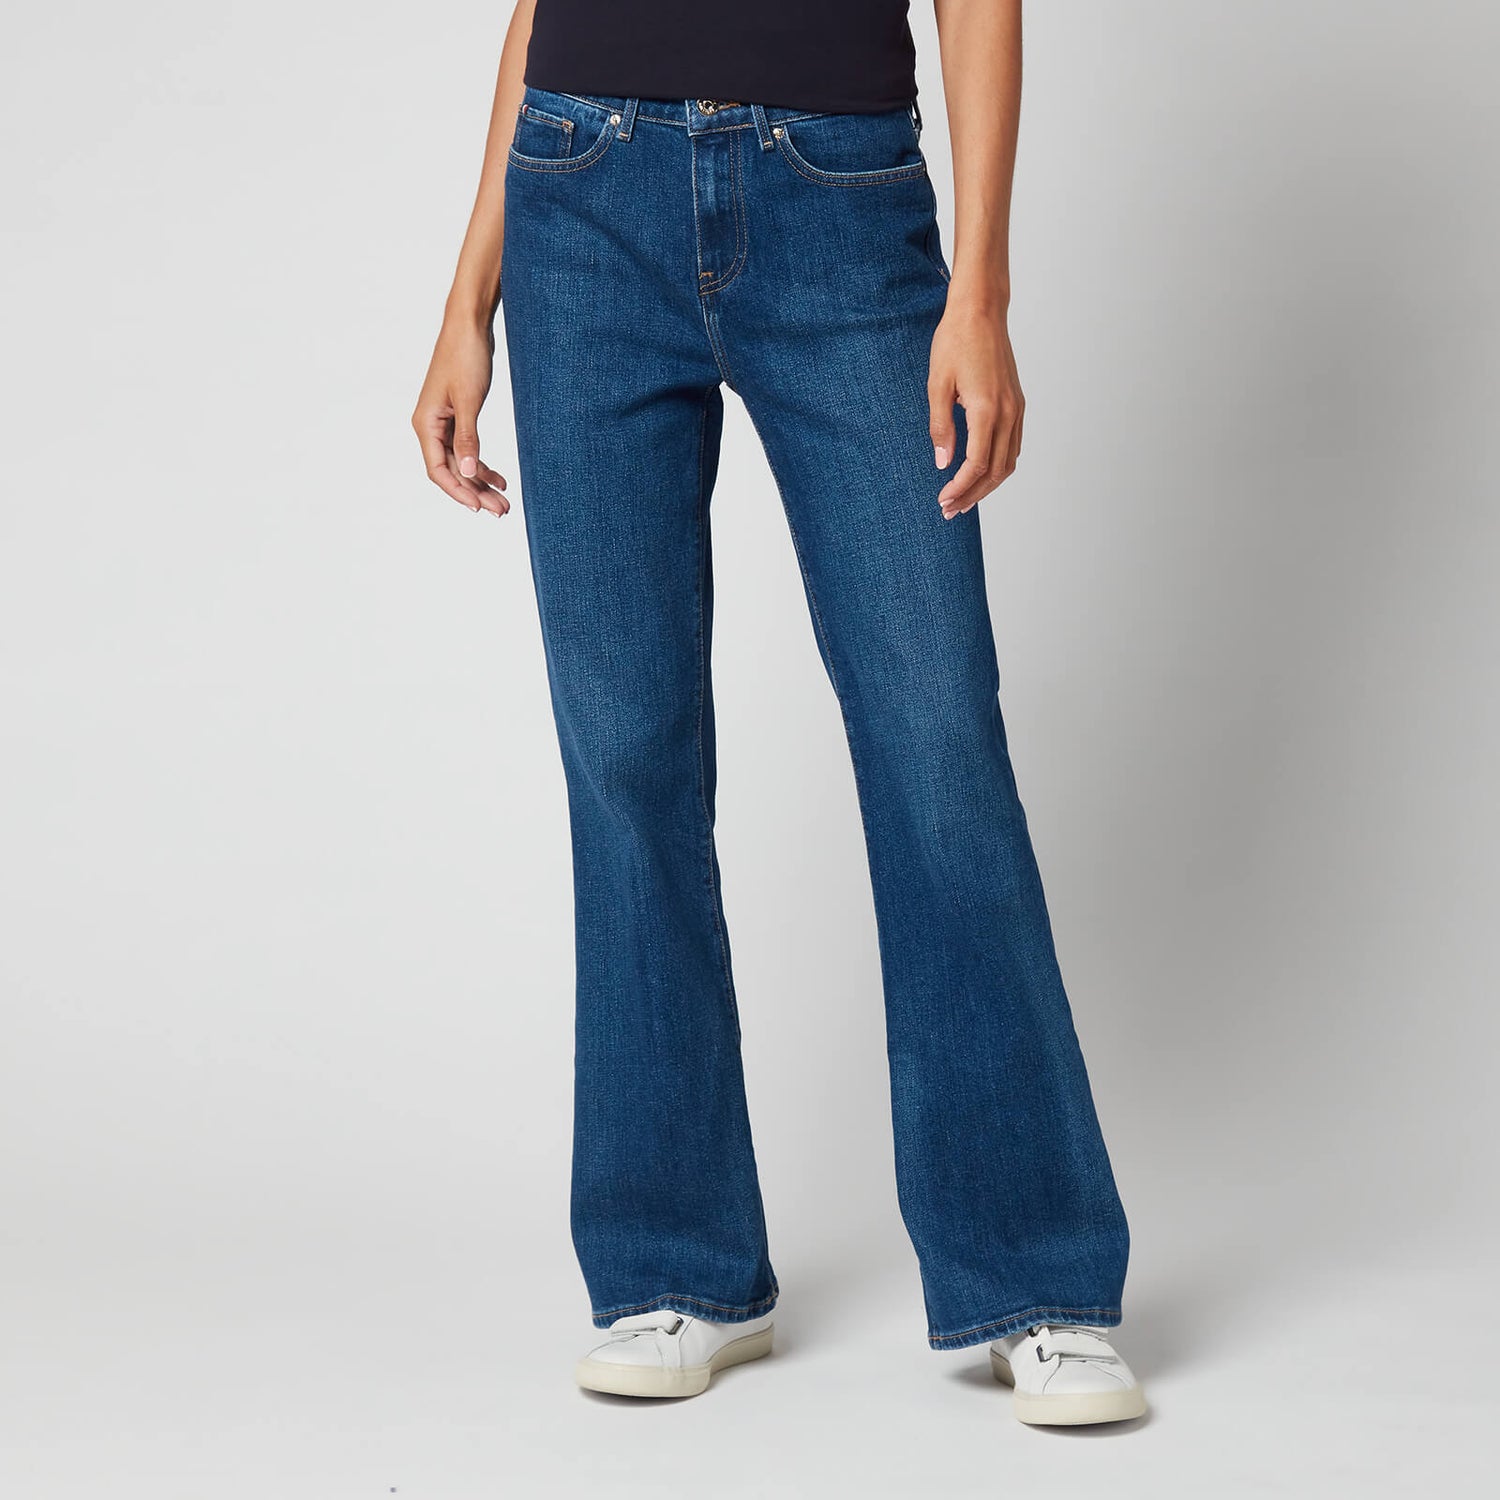 Tommy Hilfiger Women's Bootcut Rw Jeans - Leny - W29